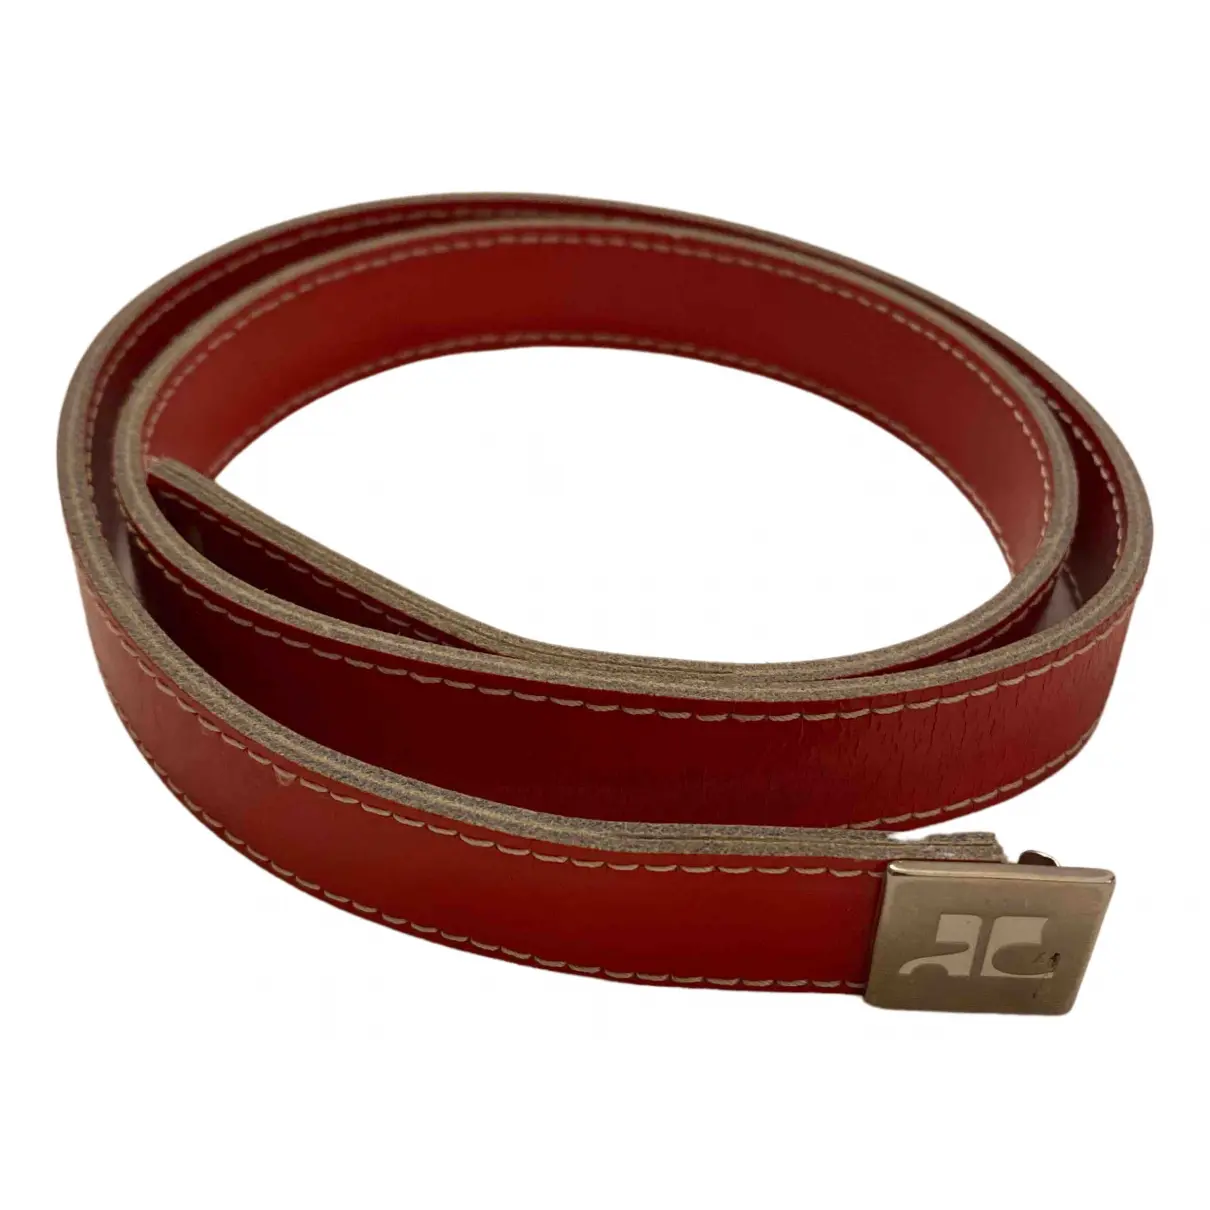 Leather belt Courrèges - Vintage